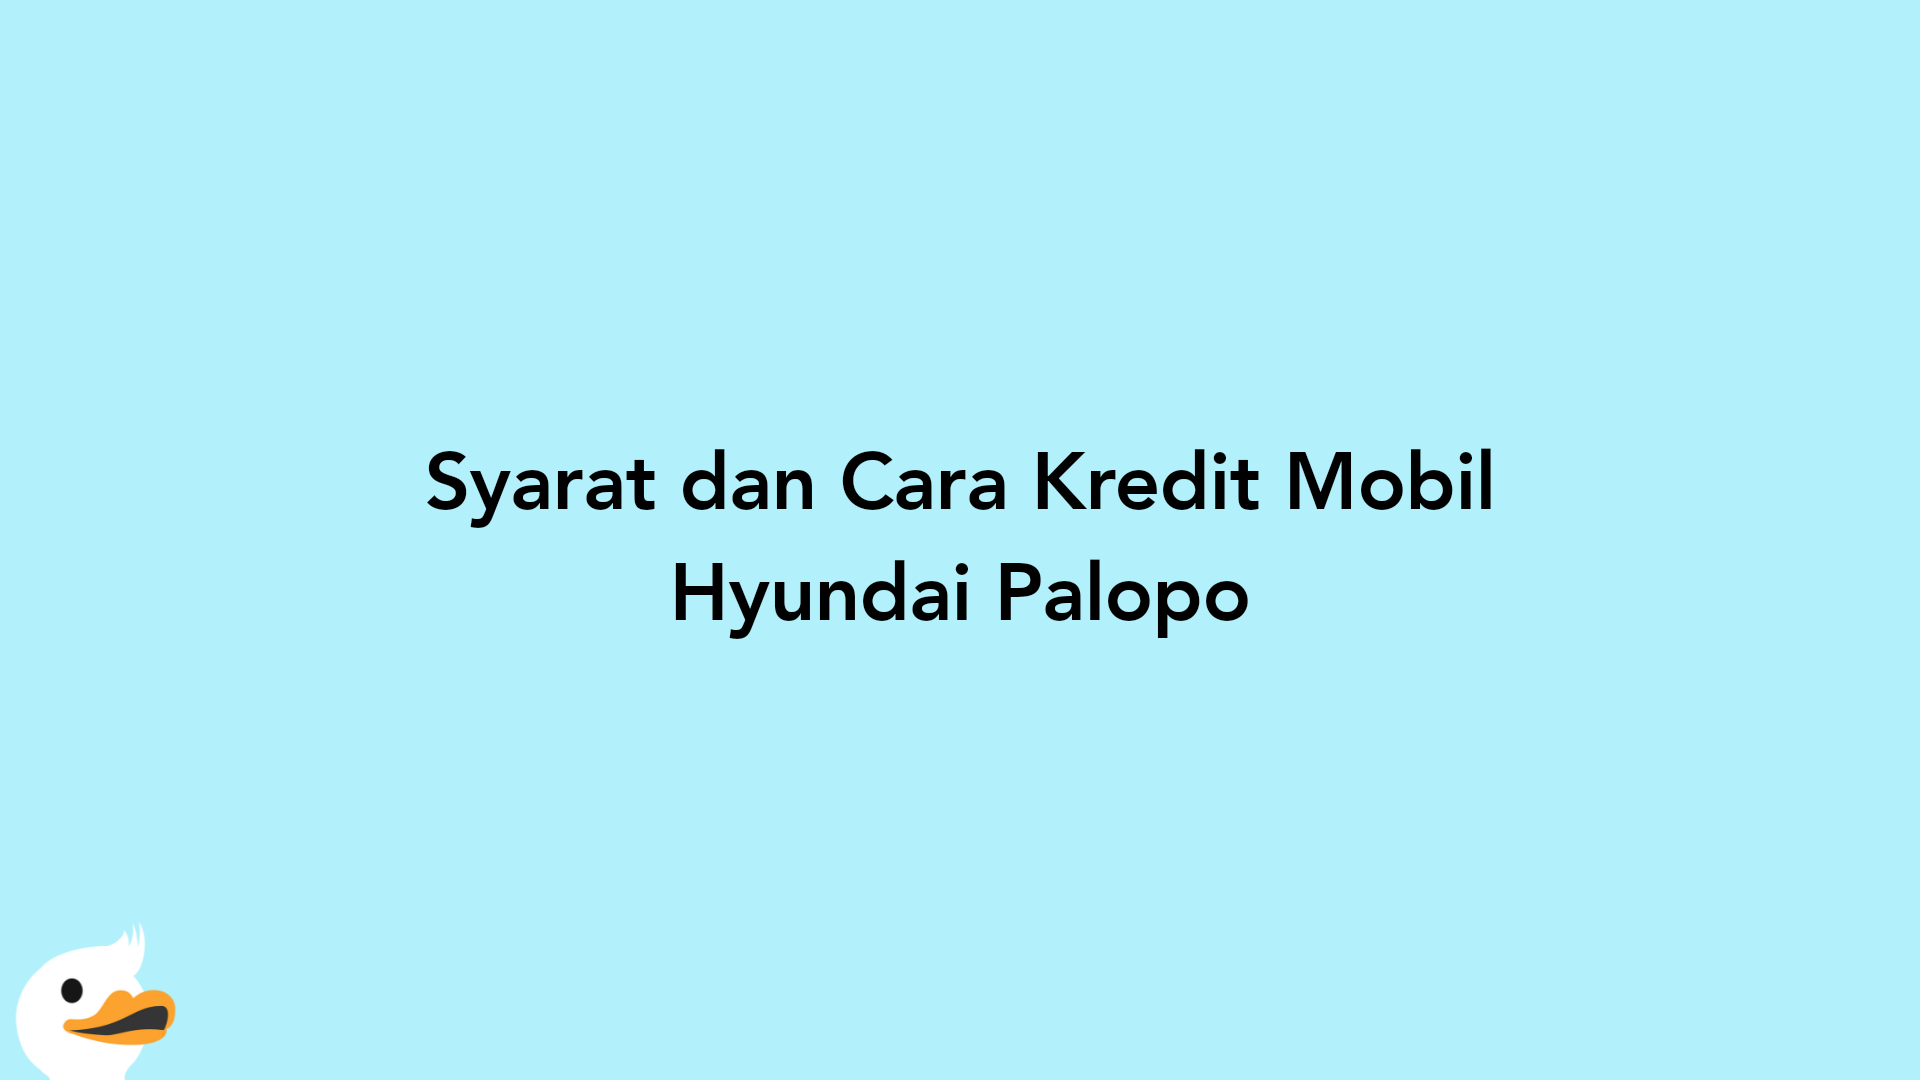 Syarat dan Cara Kredit Mobil Hyundai Palopo